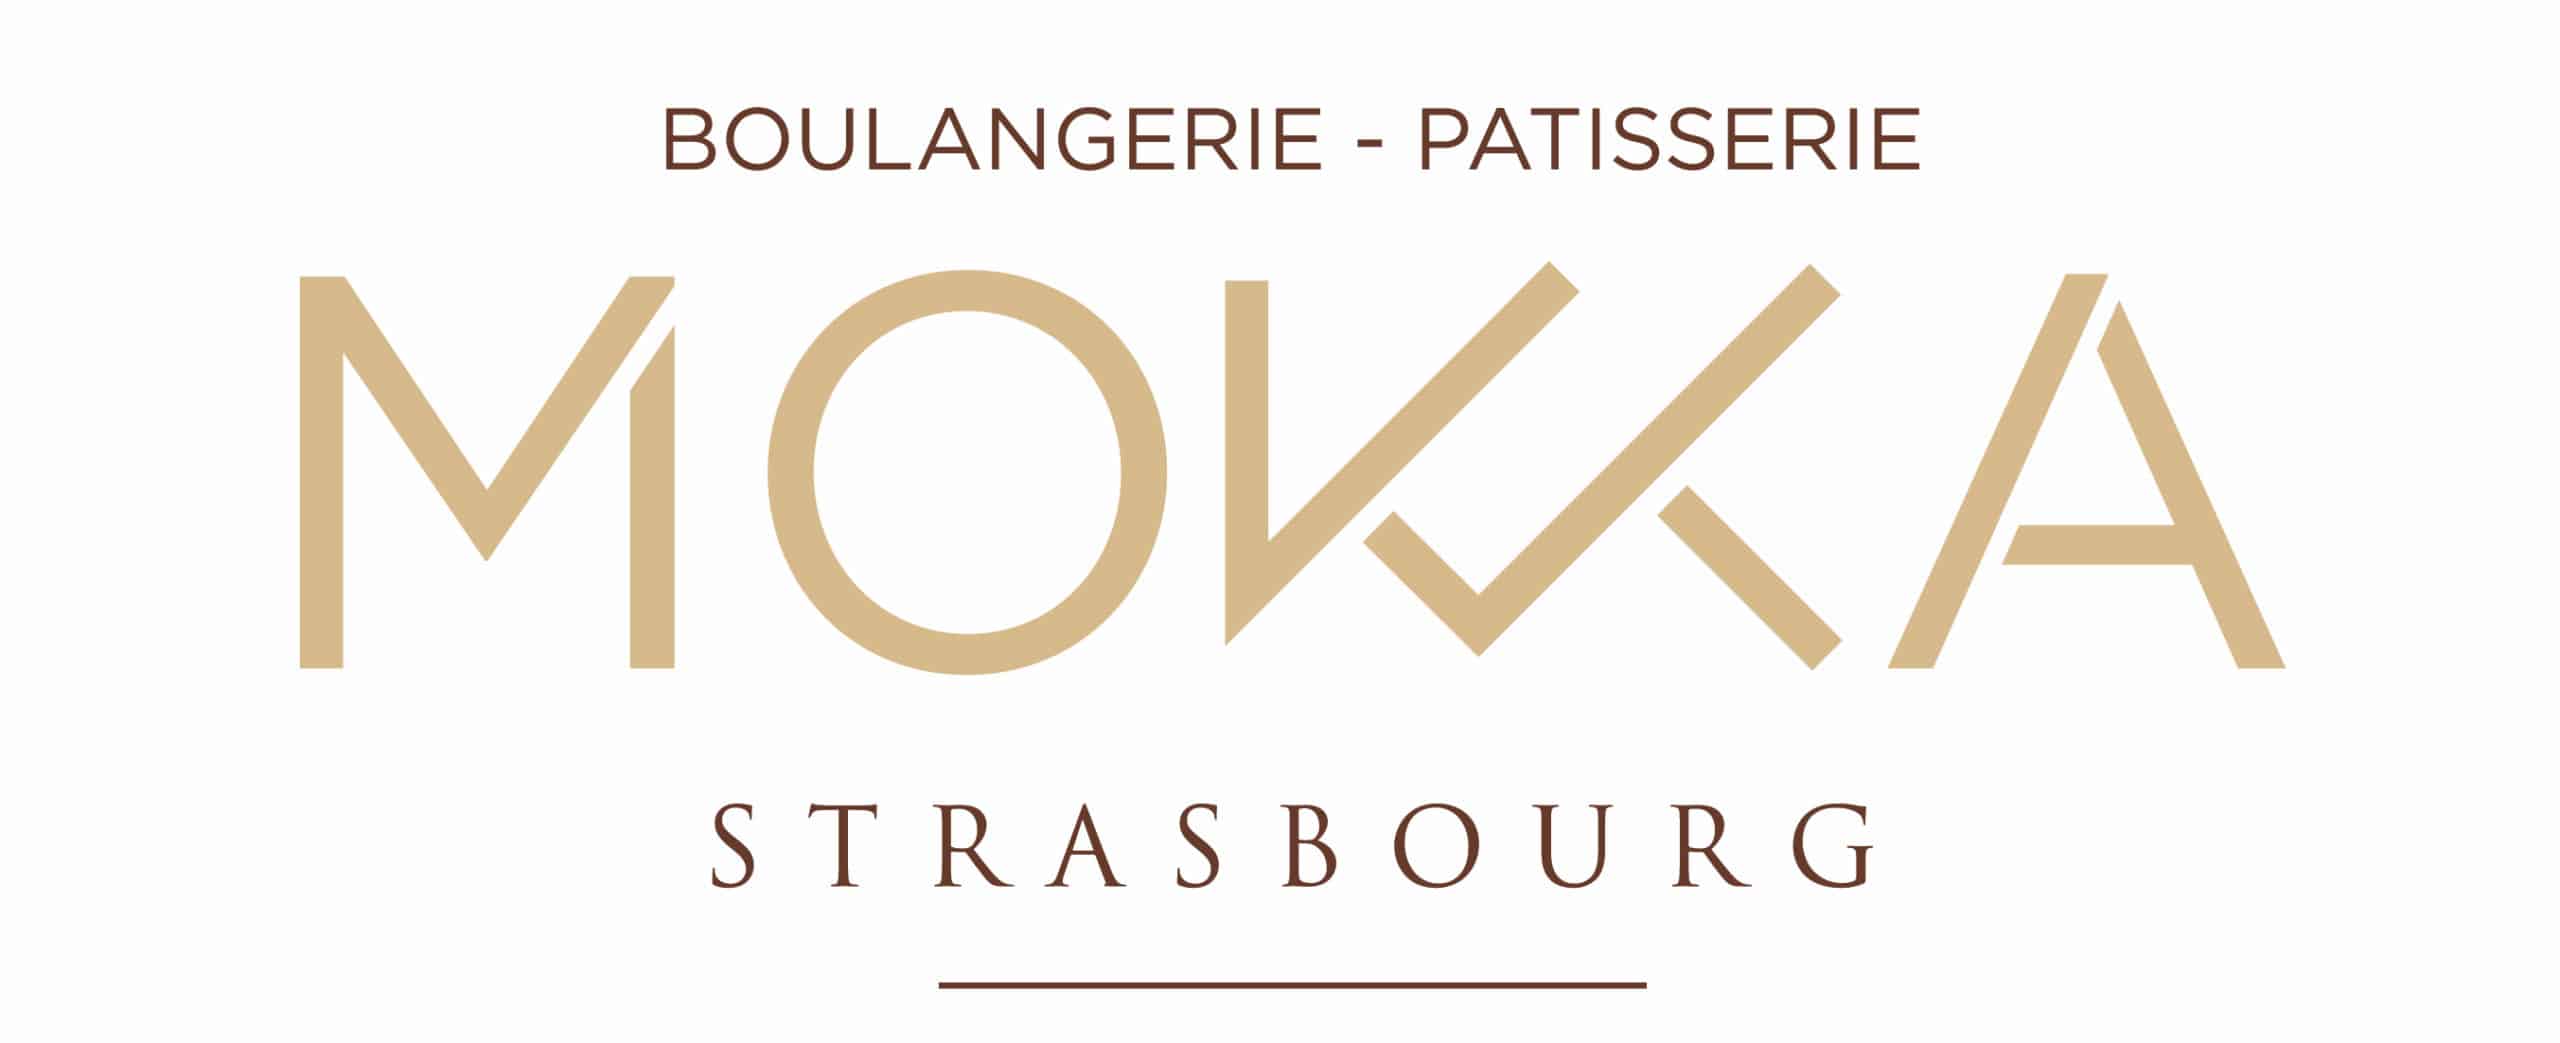 Mokka Straßburg - Logo